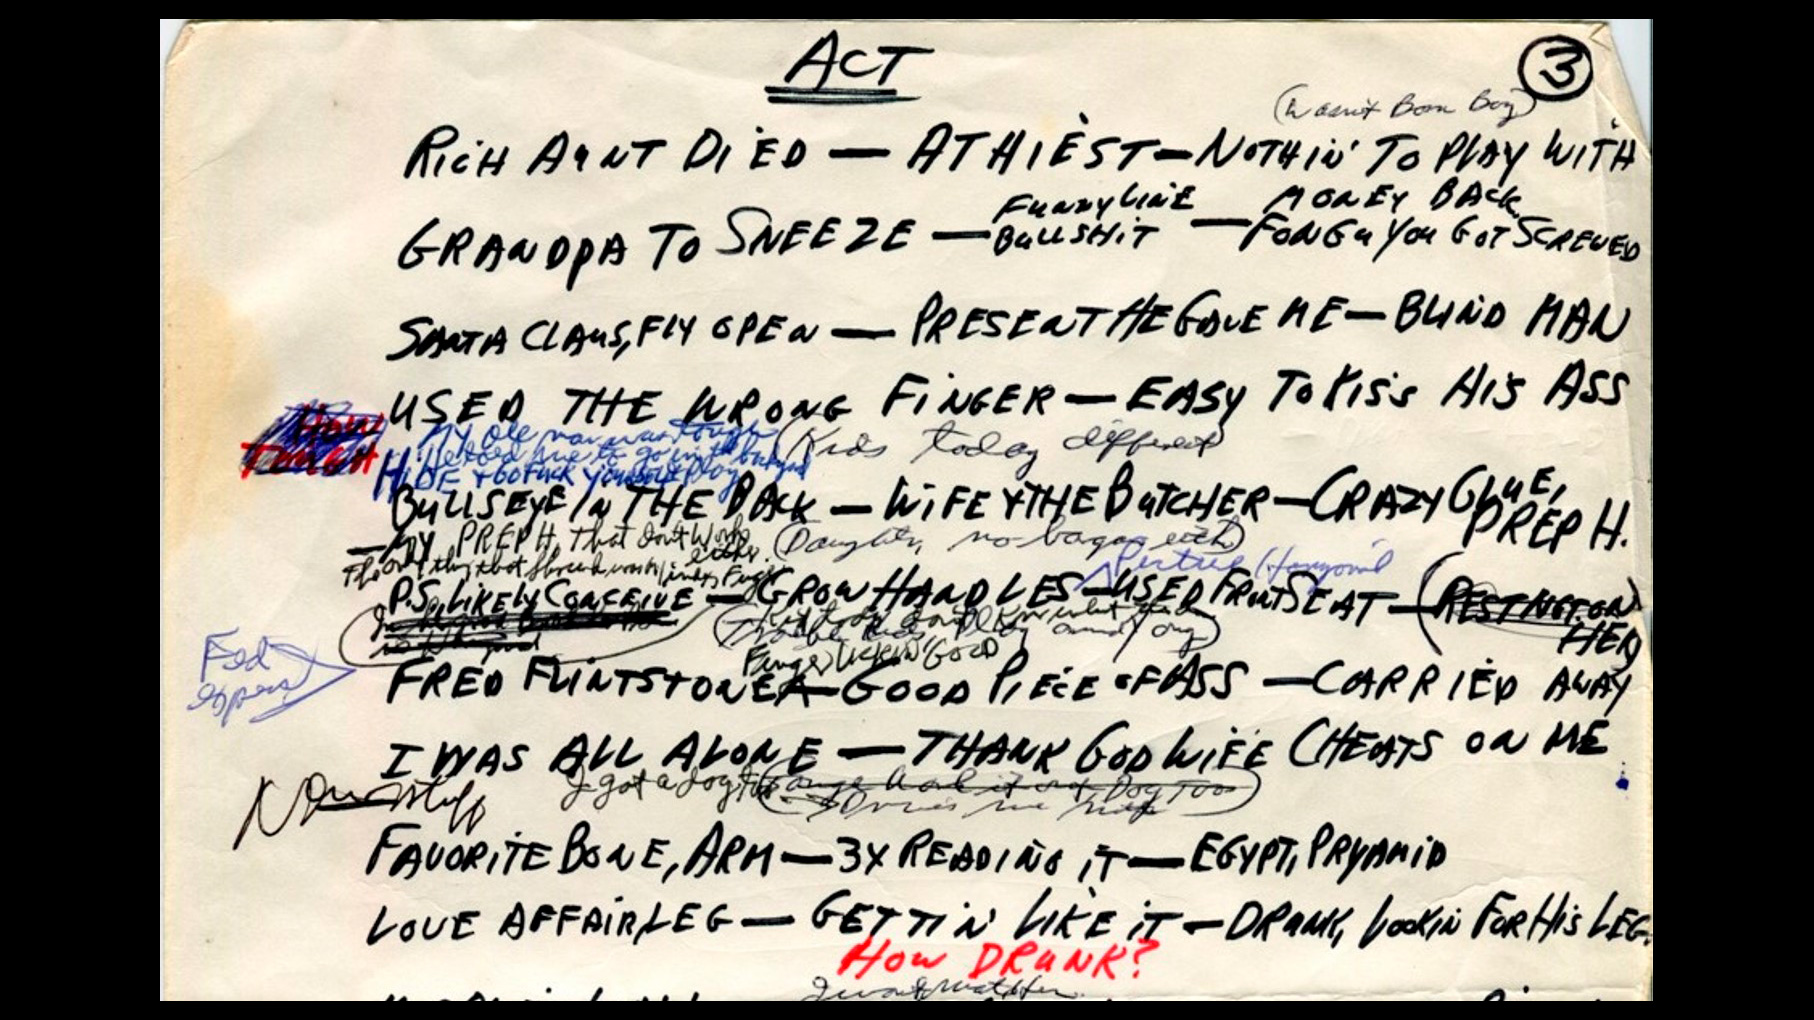 Rodney Dangerfield’s Handwritten Notes